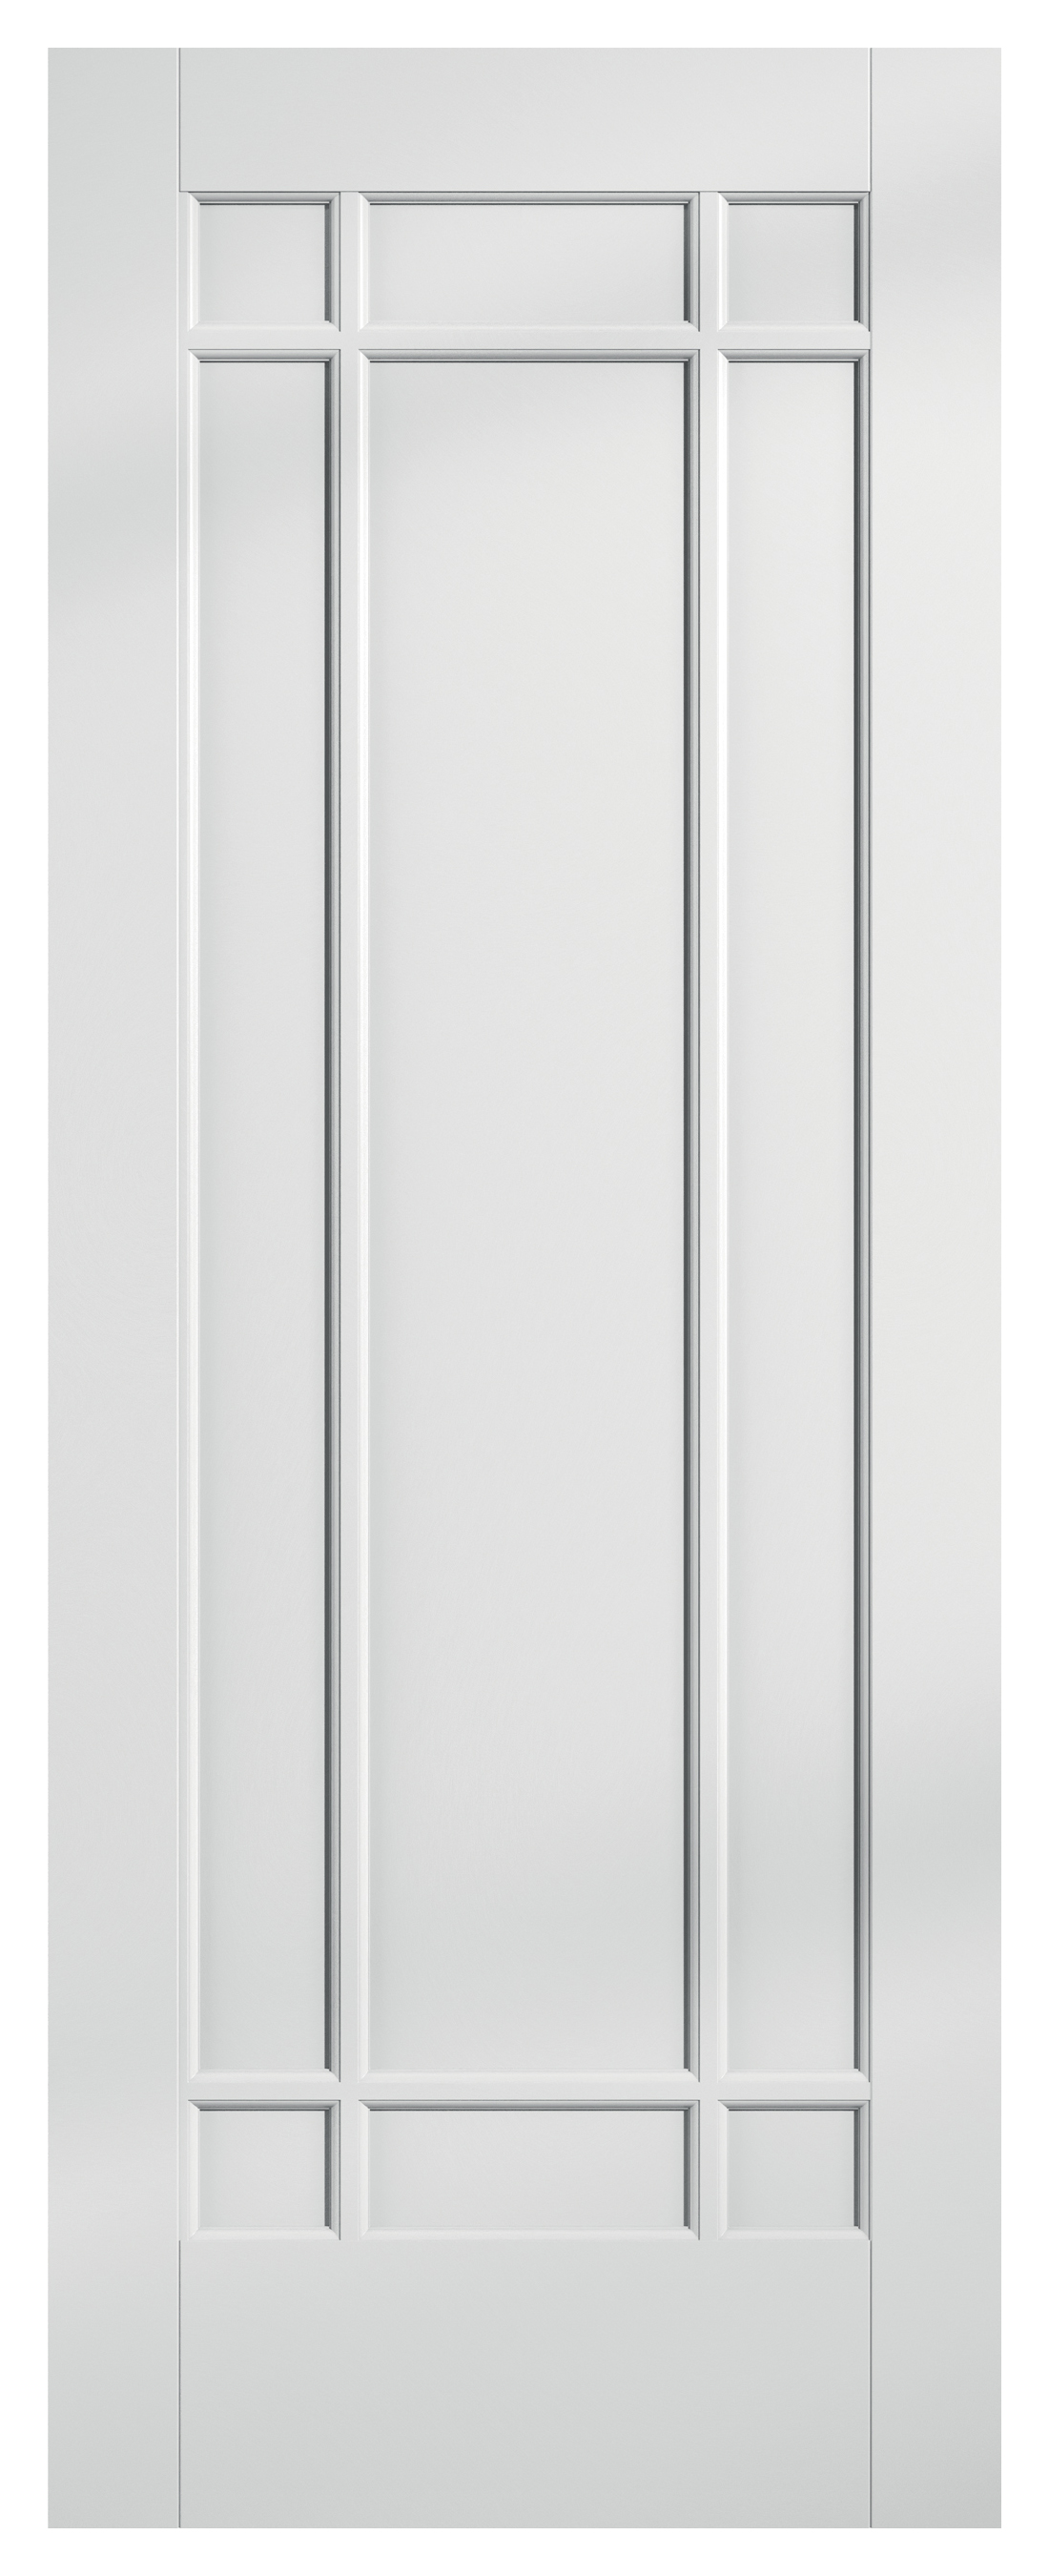 Image of LPD Internal Manhattan 9 Panel Primed White FD30 Fire Door - 838 x 1981mm